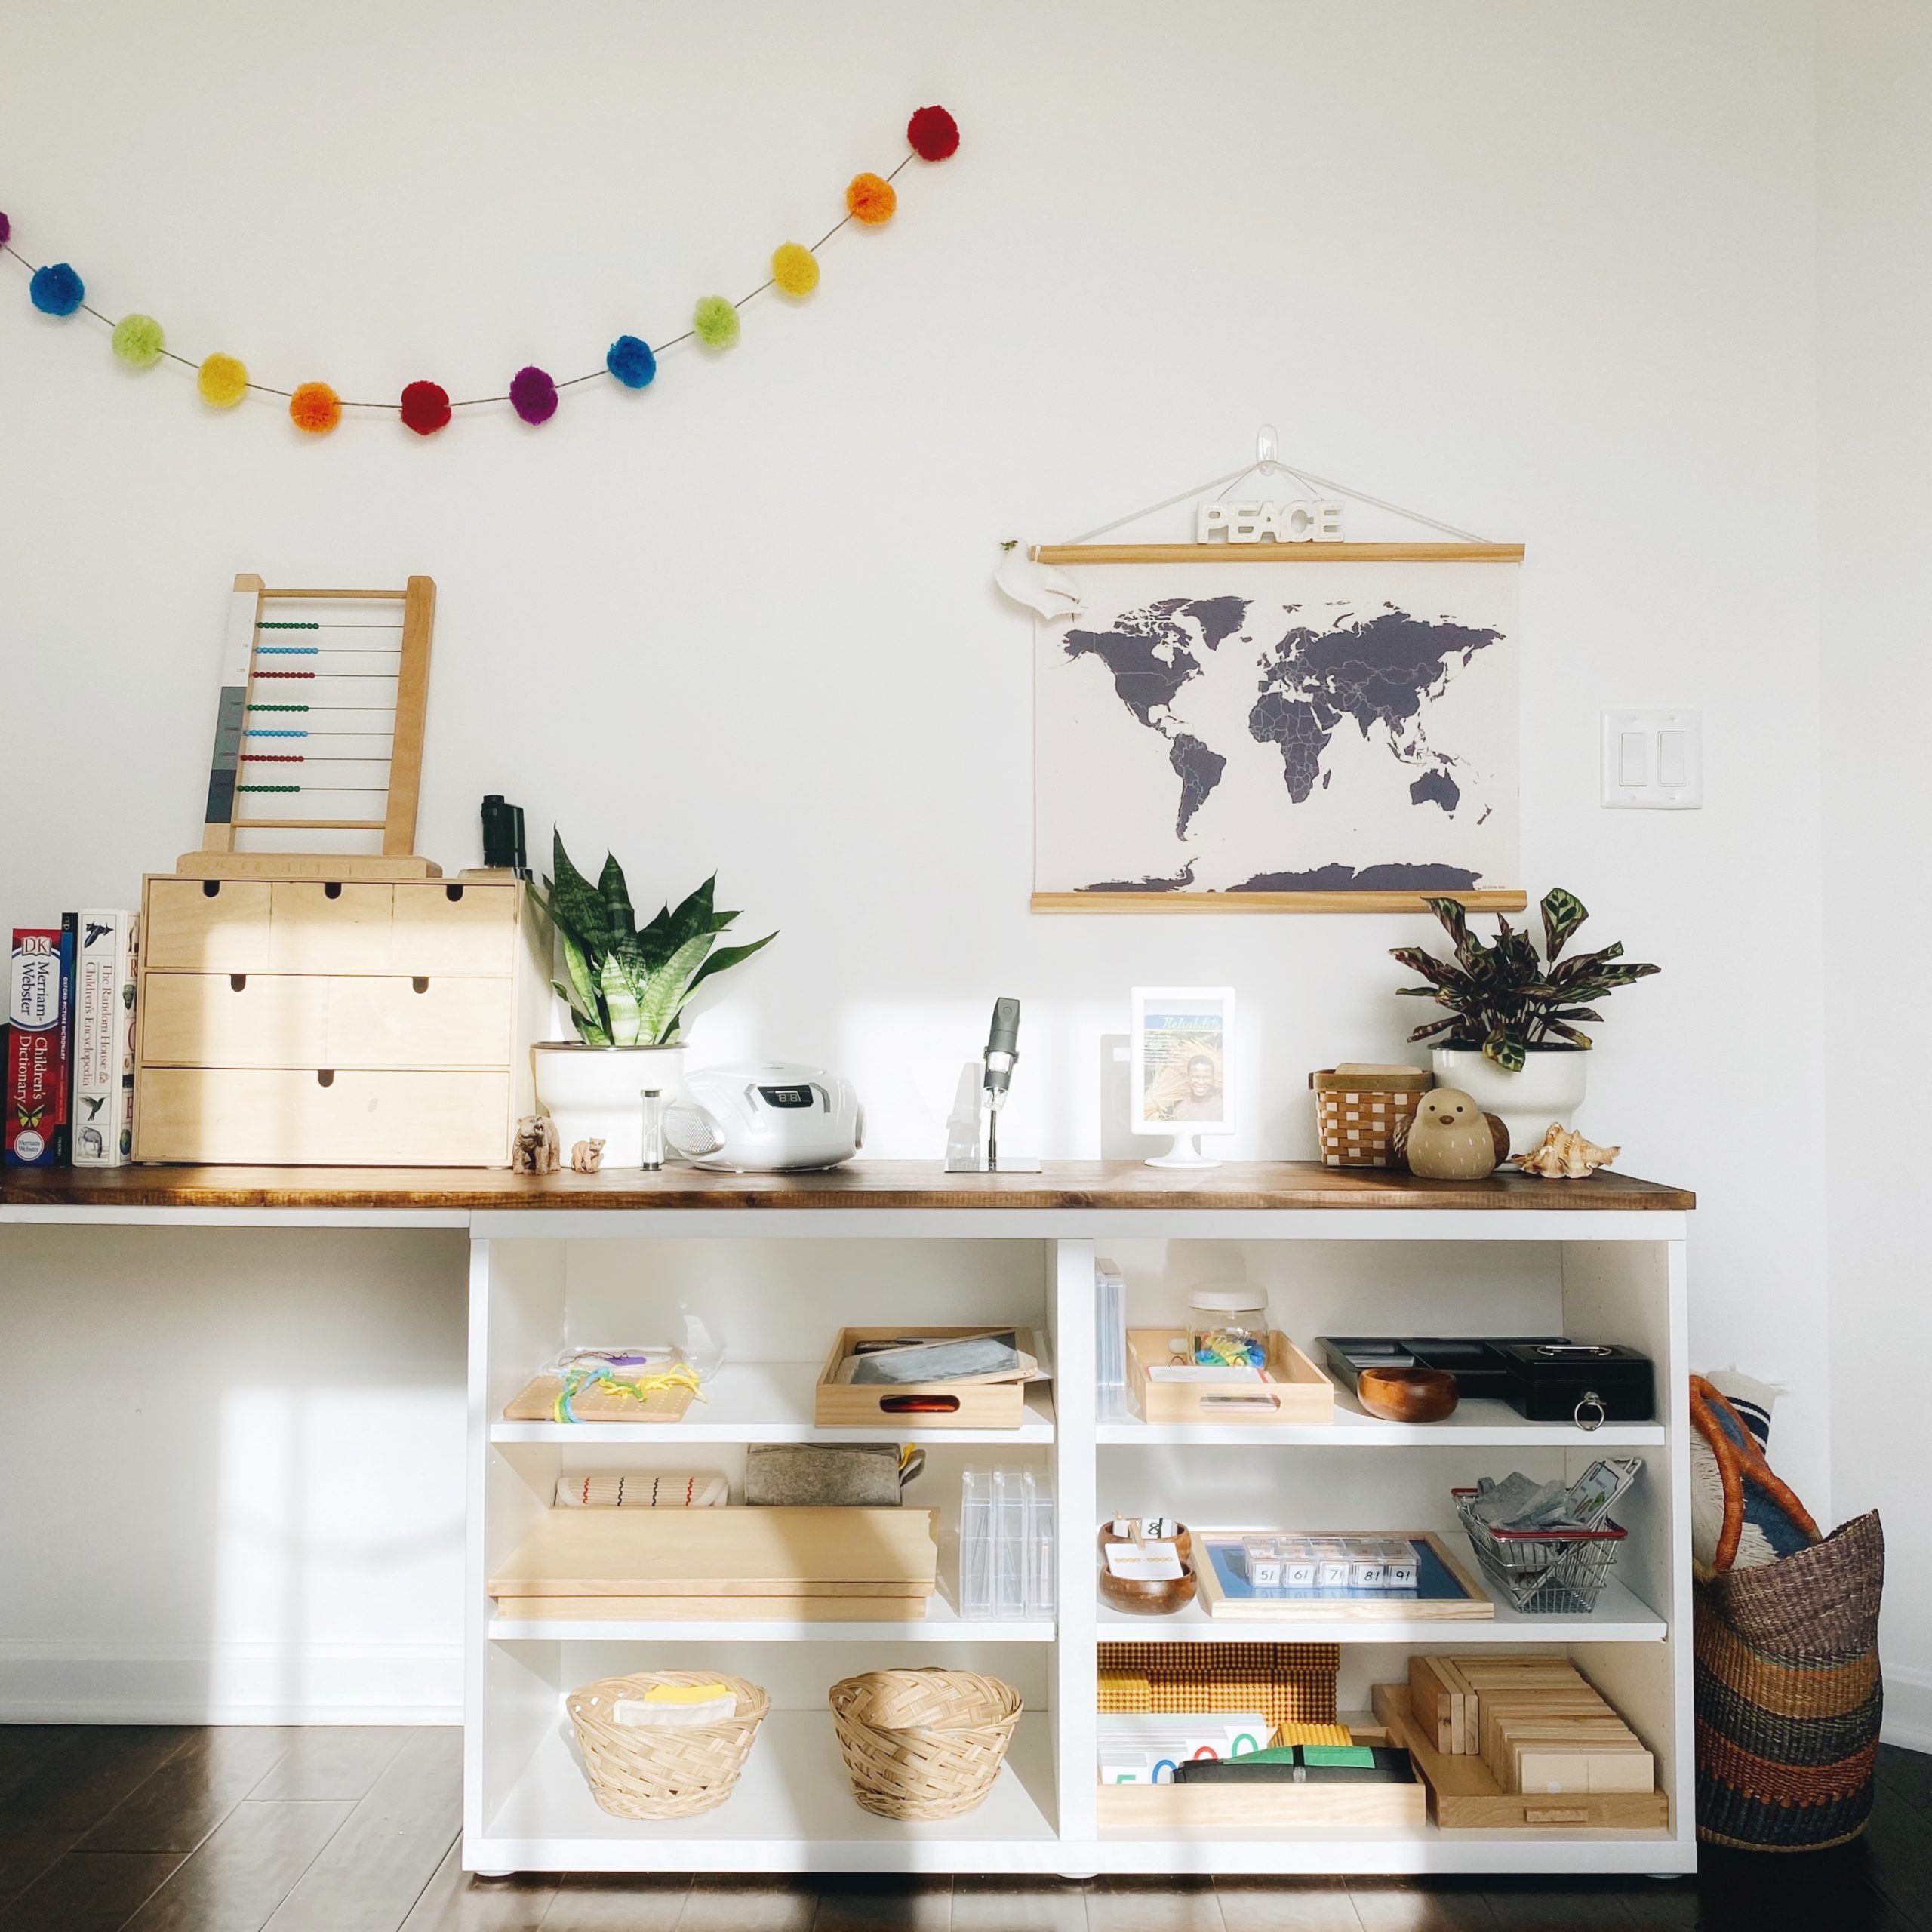 Favorite Shelves, Trays, Baskets, and More for Montessori